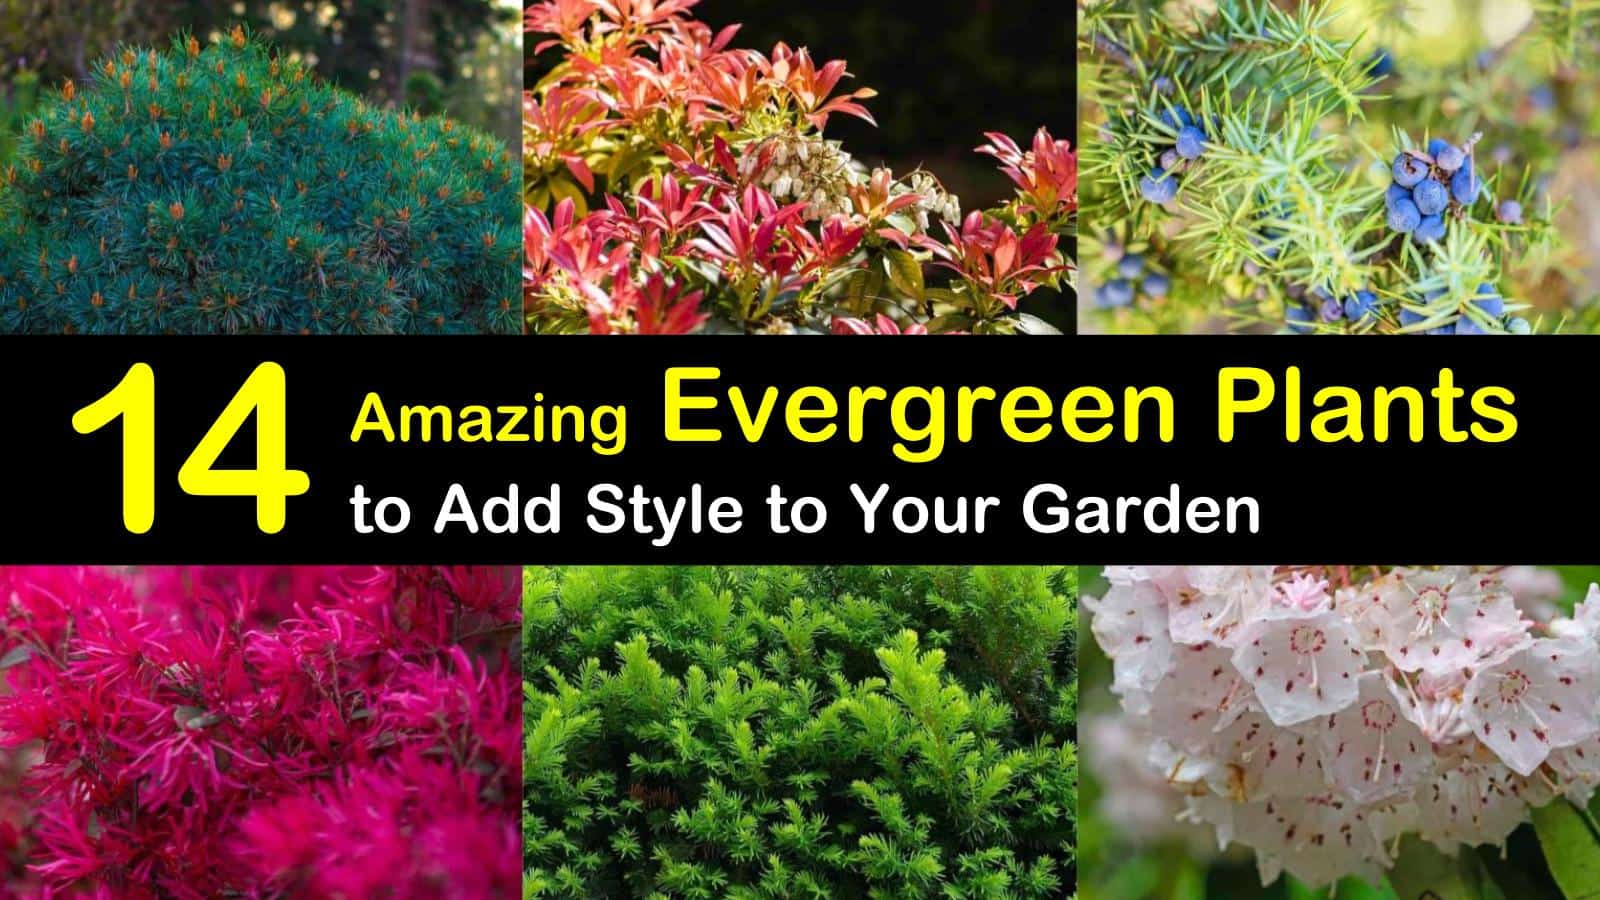 evergreen plants titleimg1